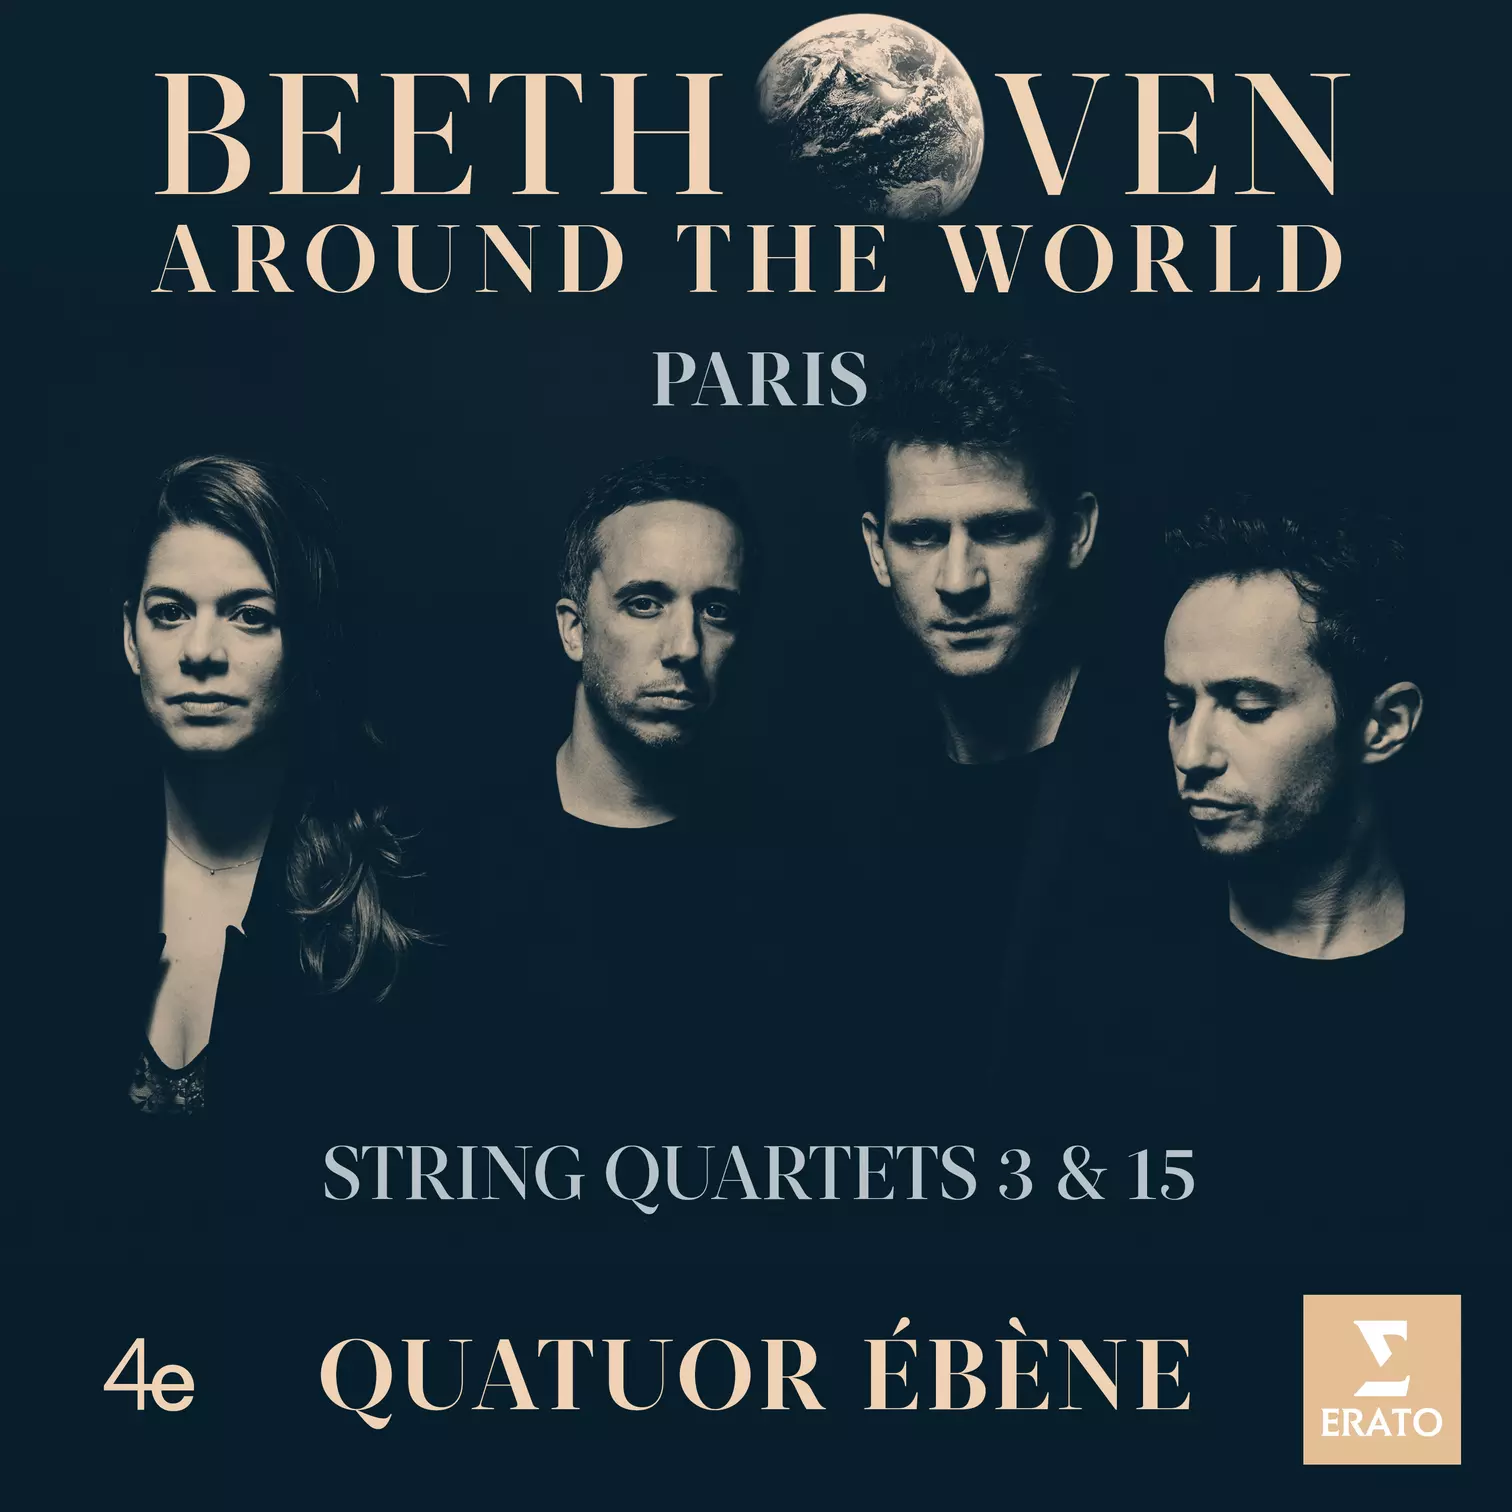 Beethoven Around the World - Paris - String Quartets 3 & 15